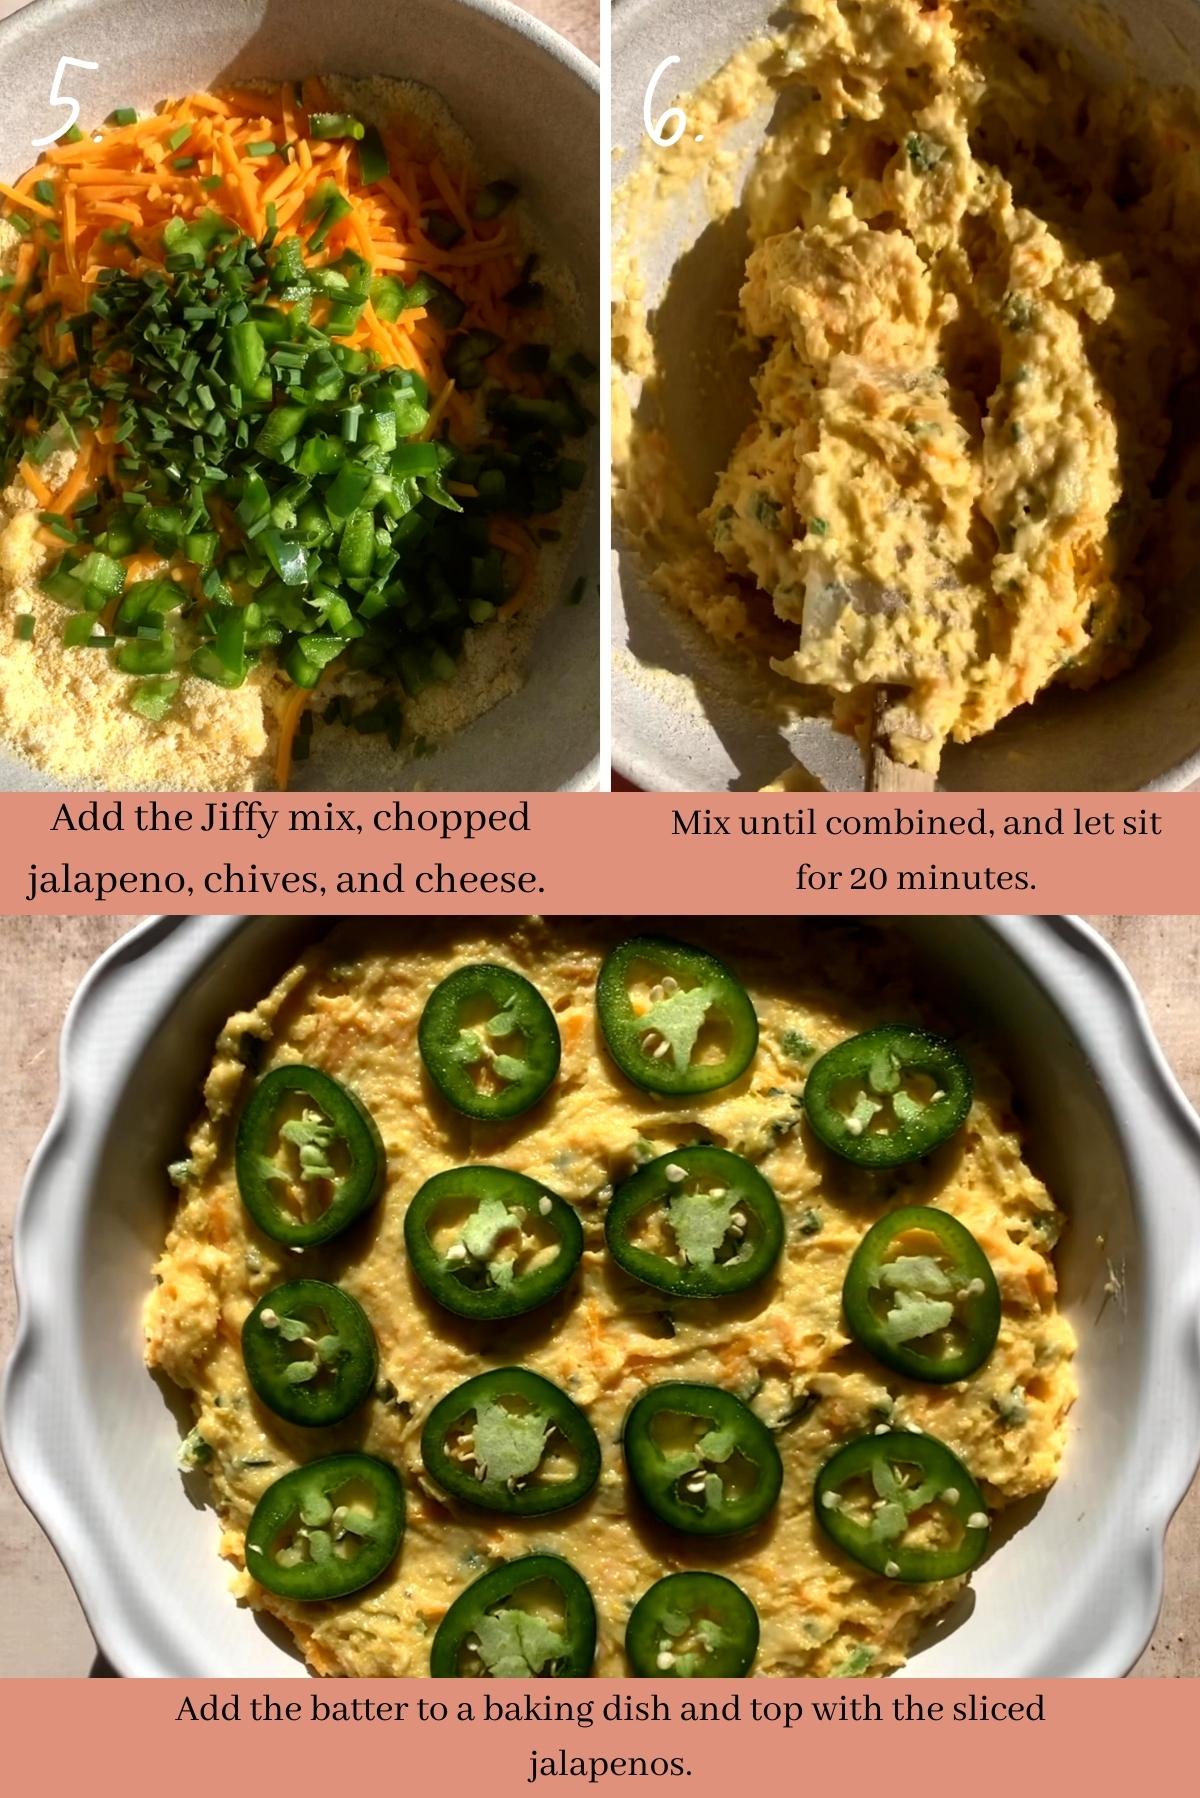 Collage showing how to make jiffy jalapeño cornbread.